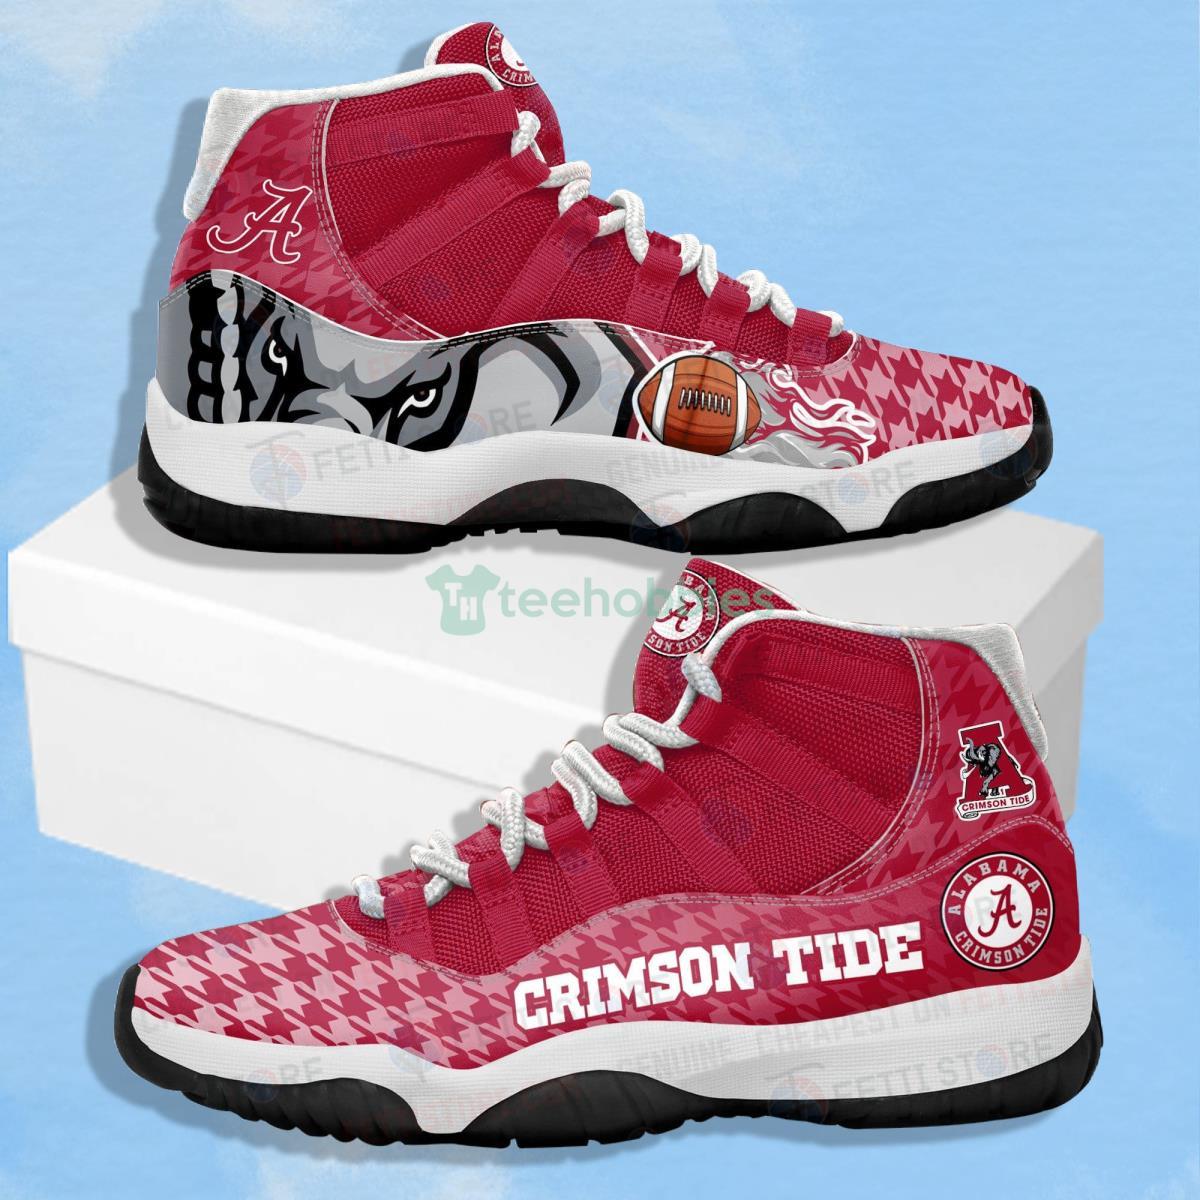 Alabama Crimson Tide Mascot And Pattern Print Impressive Design Air Jordan 11 Shoes Product Photo 1